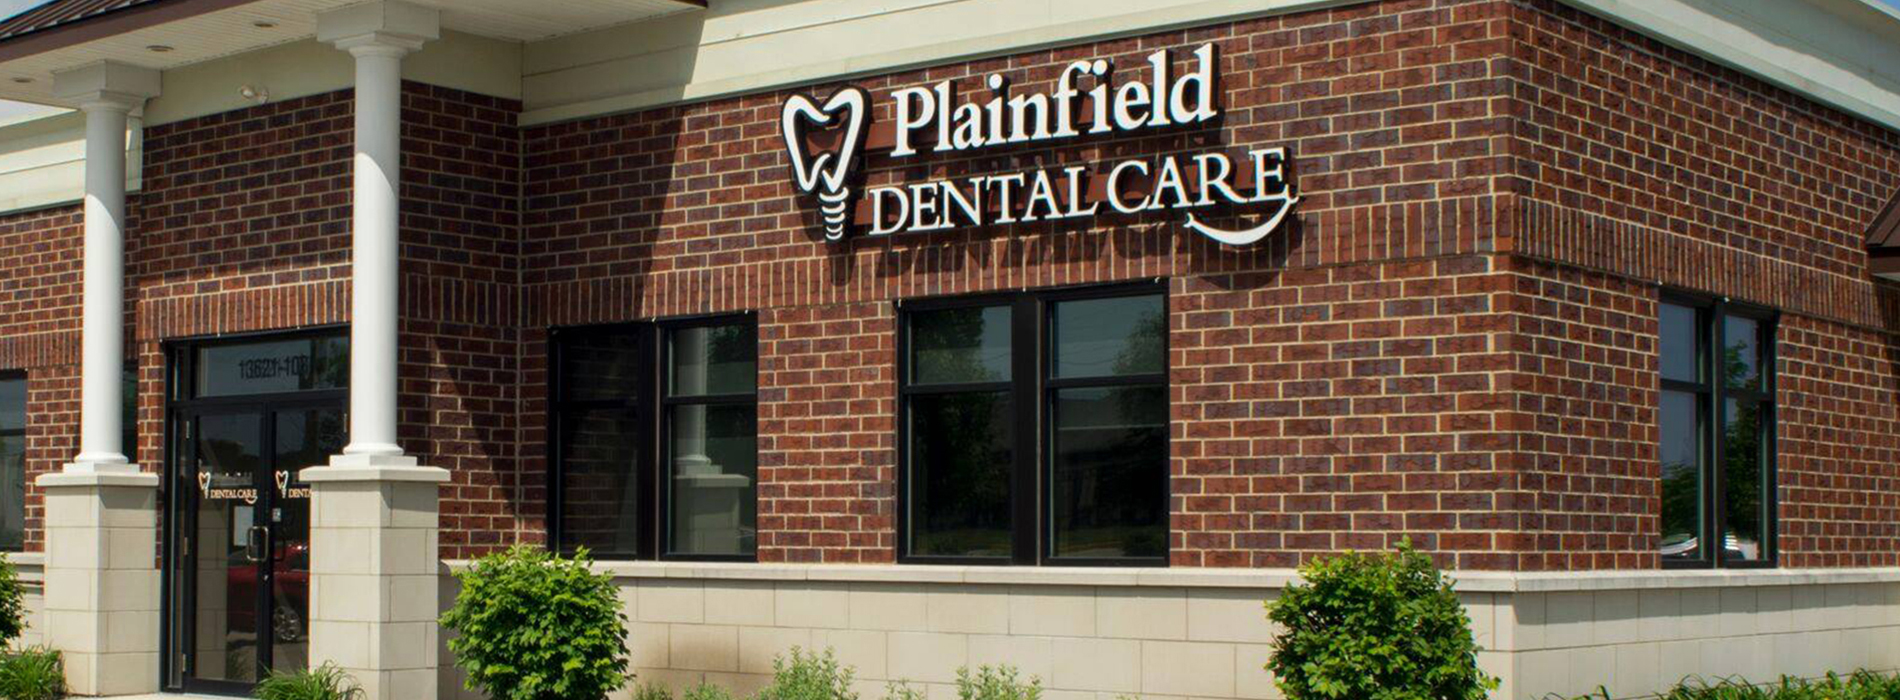 Plainfield Dental Care